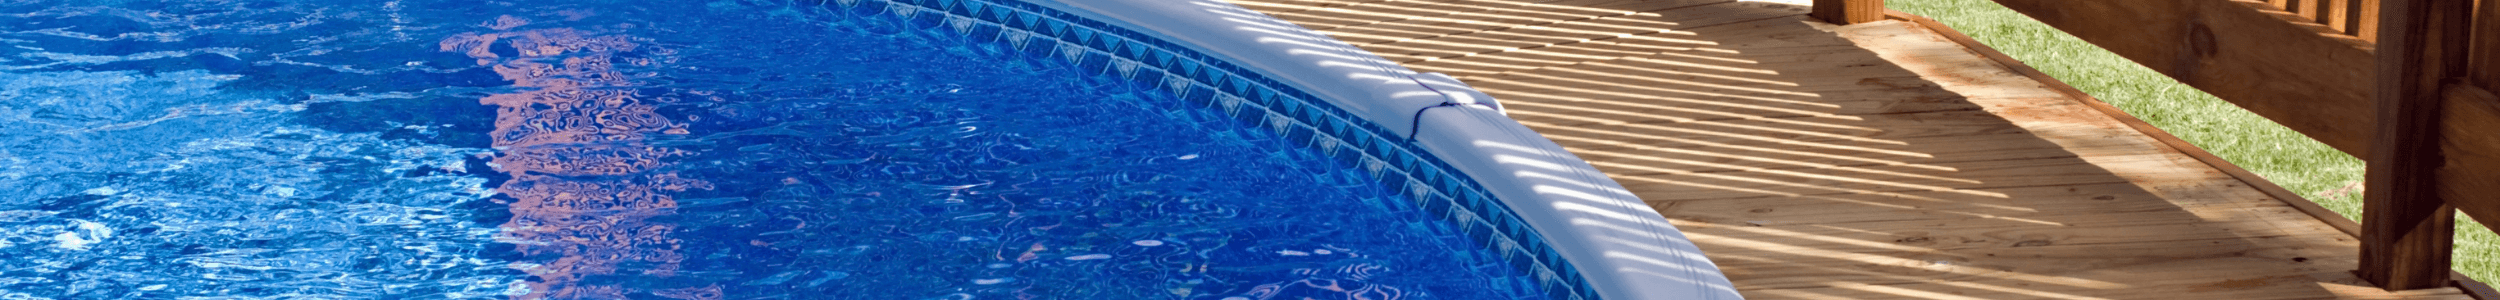 Swimming Pools & Hot Tub Dealer